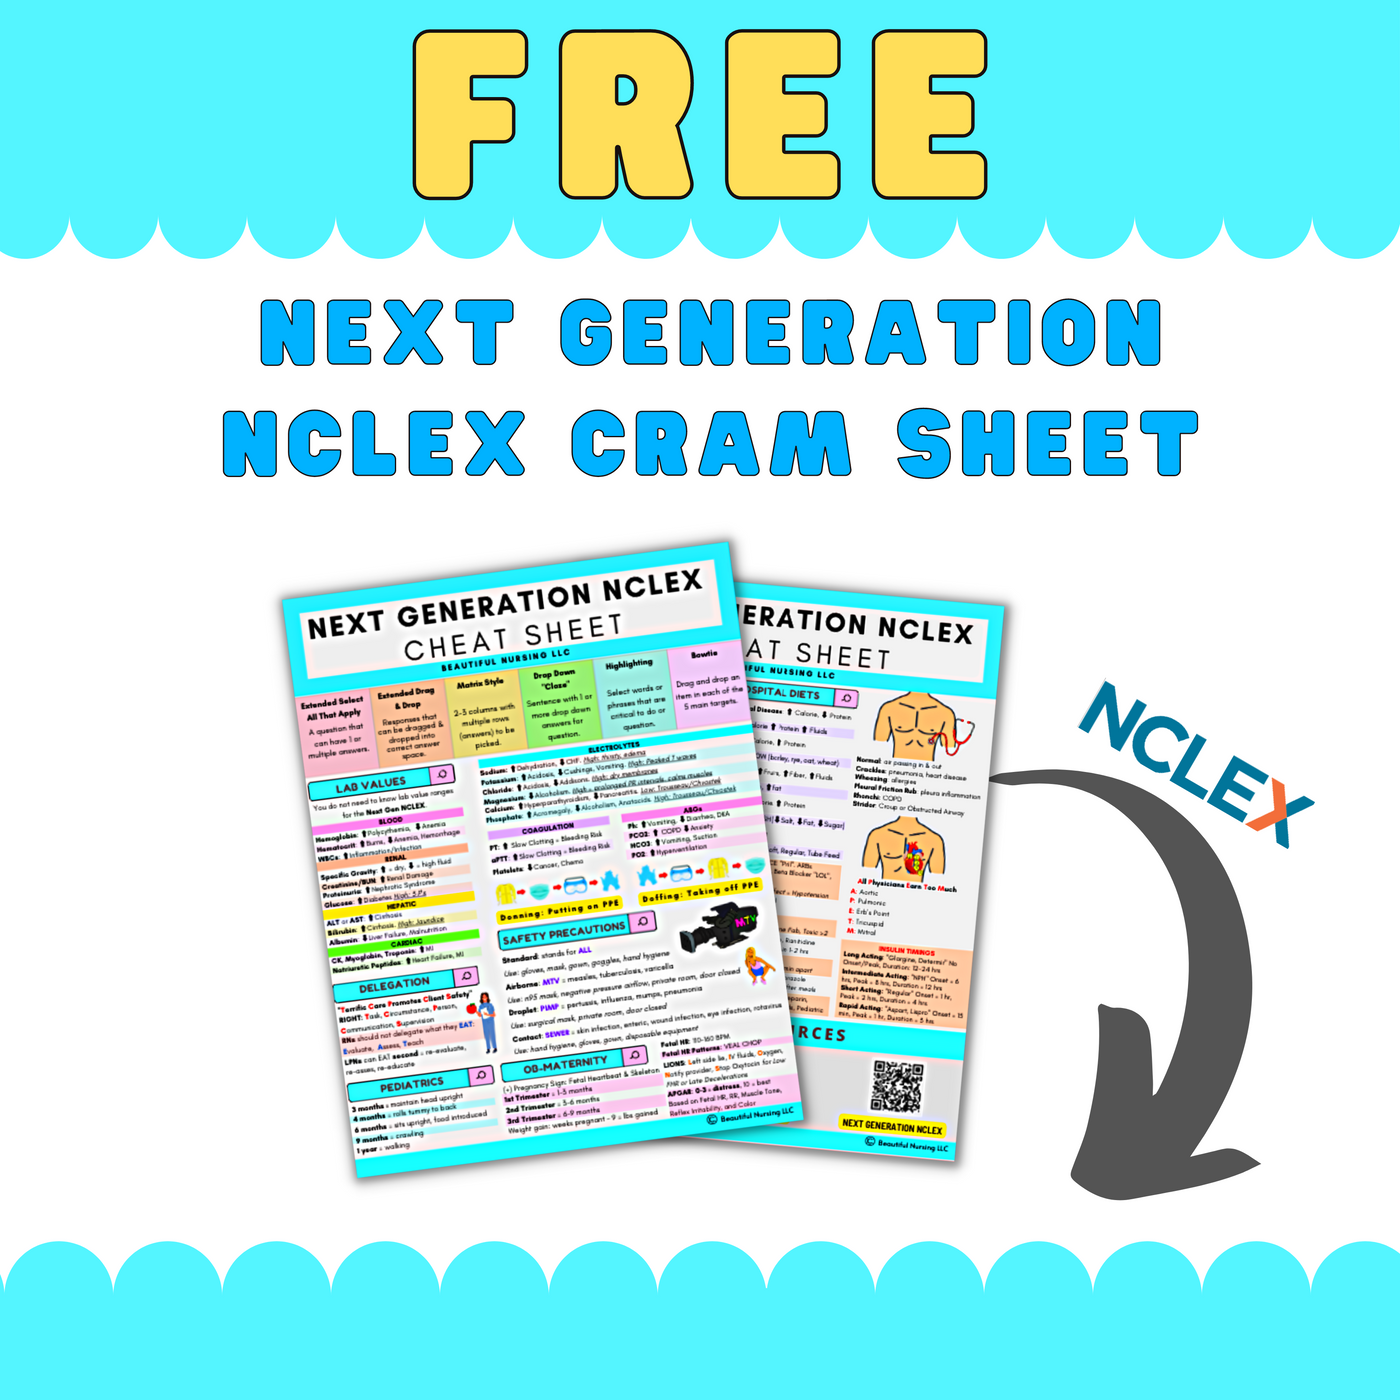 Next Generation NCLEX Exam Cheat Sheet